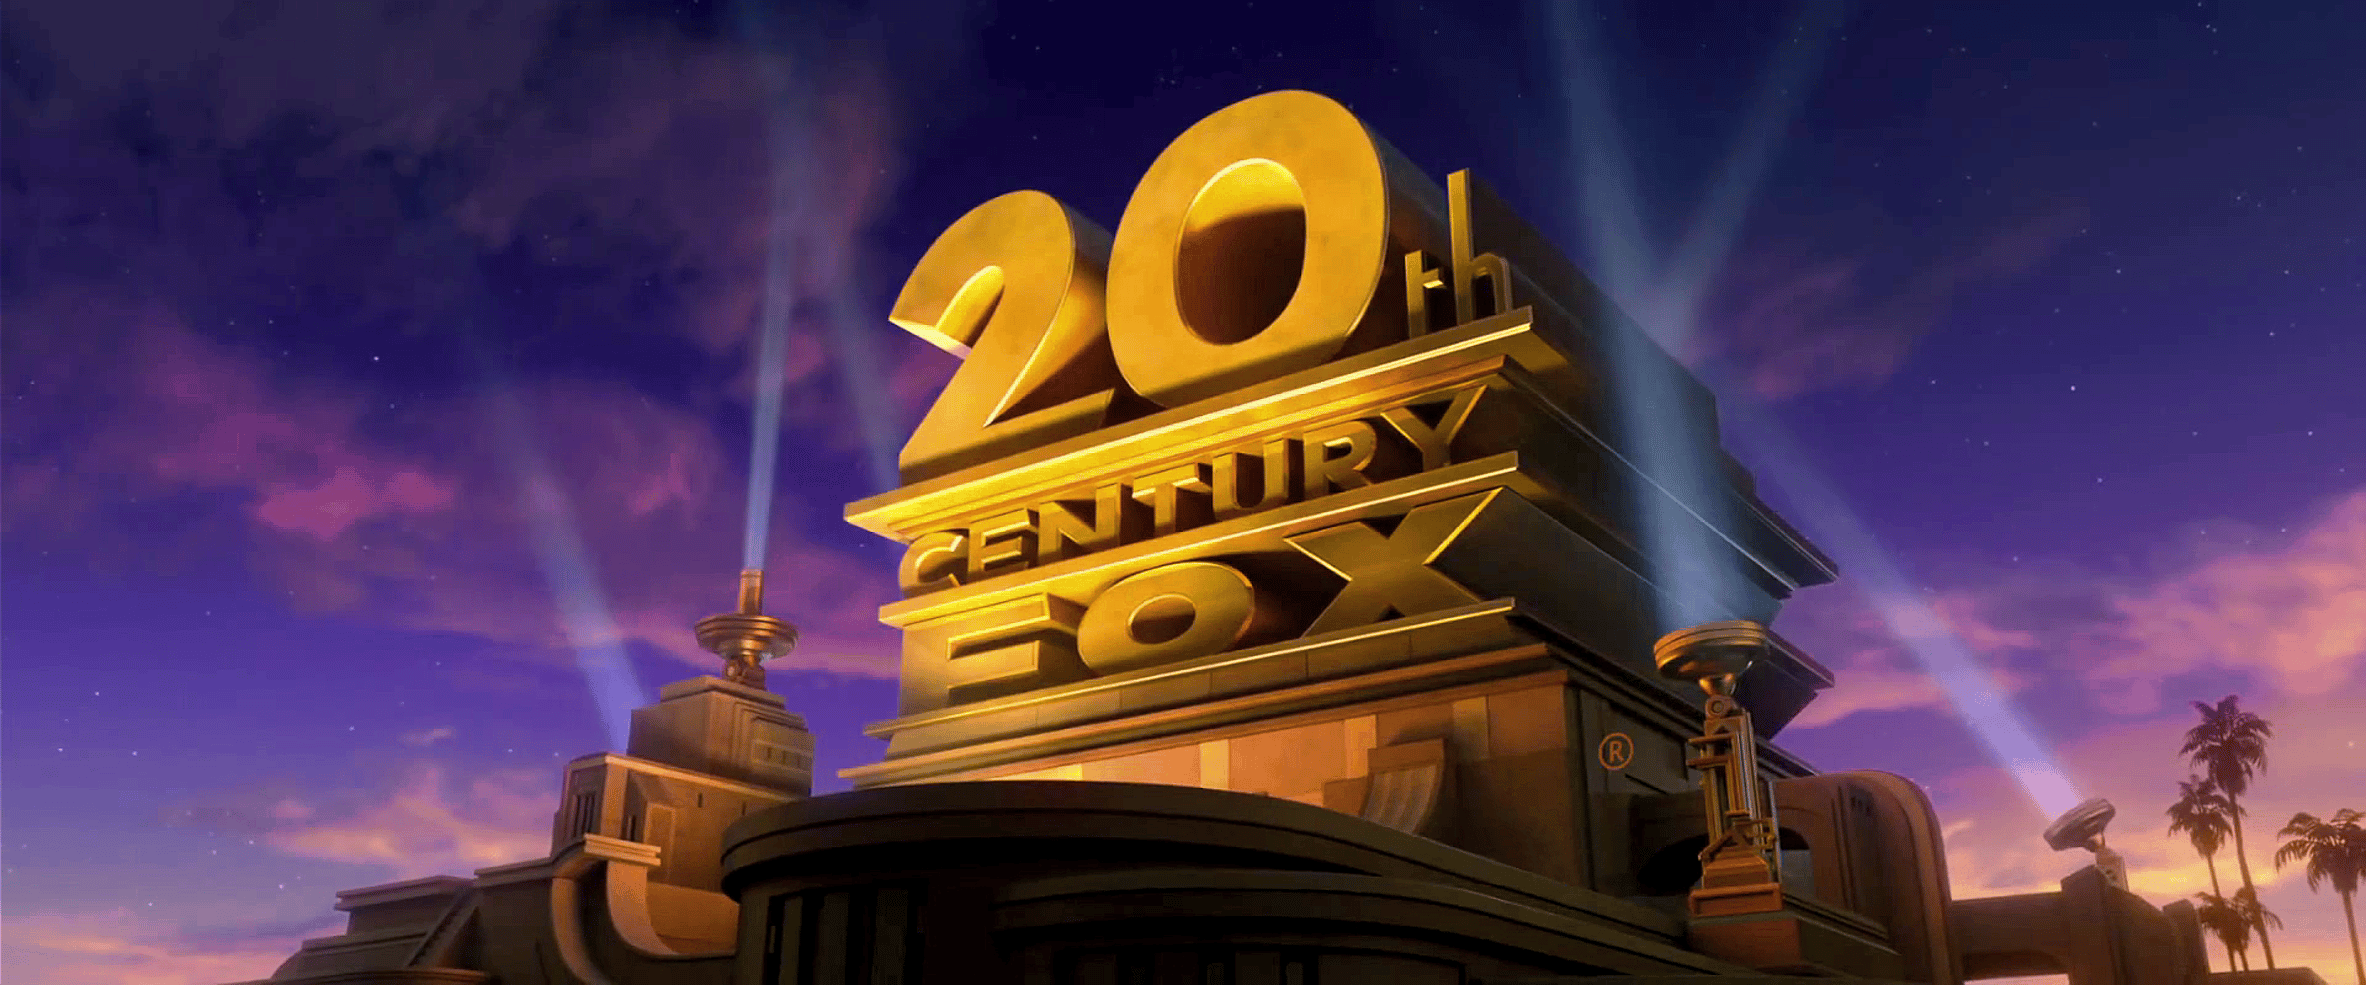 20th Century Fox’s Artemis Casting a Speaking Role